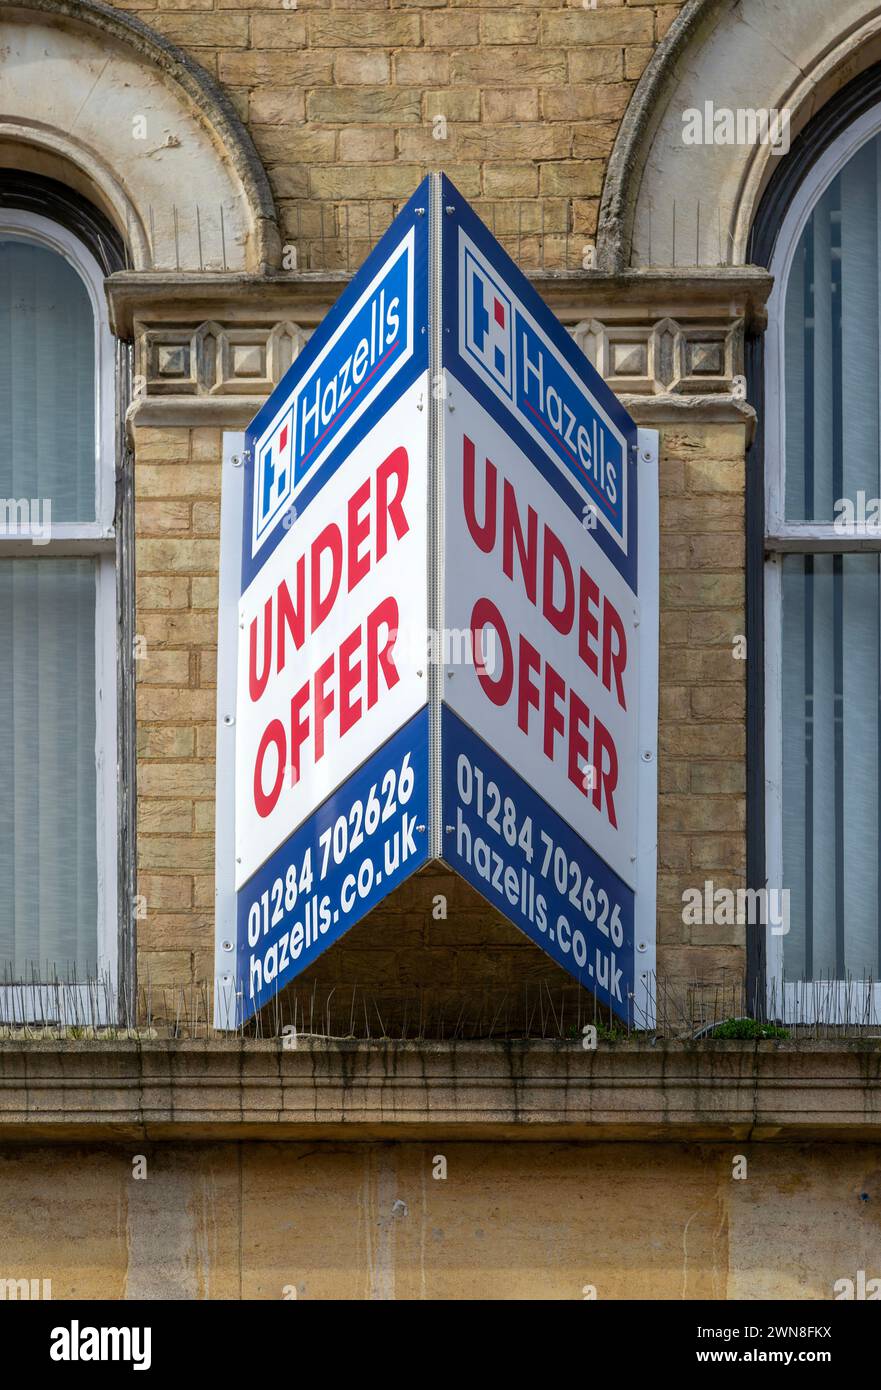 Under Offer sign commercial property Hazells estate agents, Stowmarket, Suffolk, England, UK Stock Photo